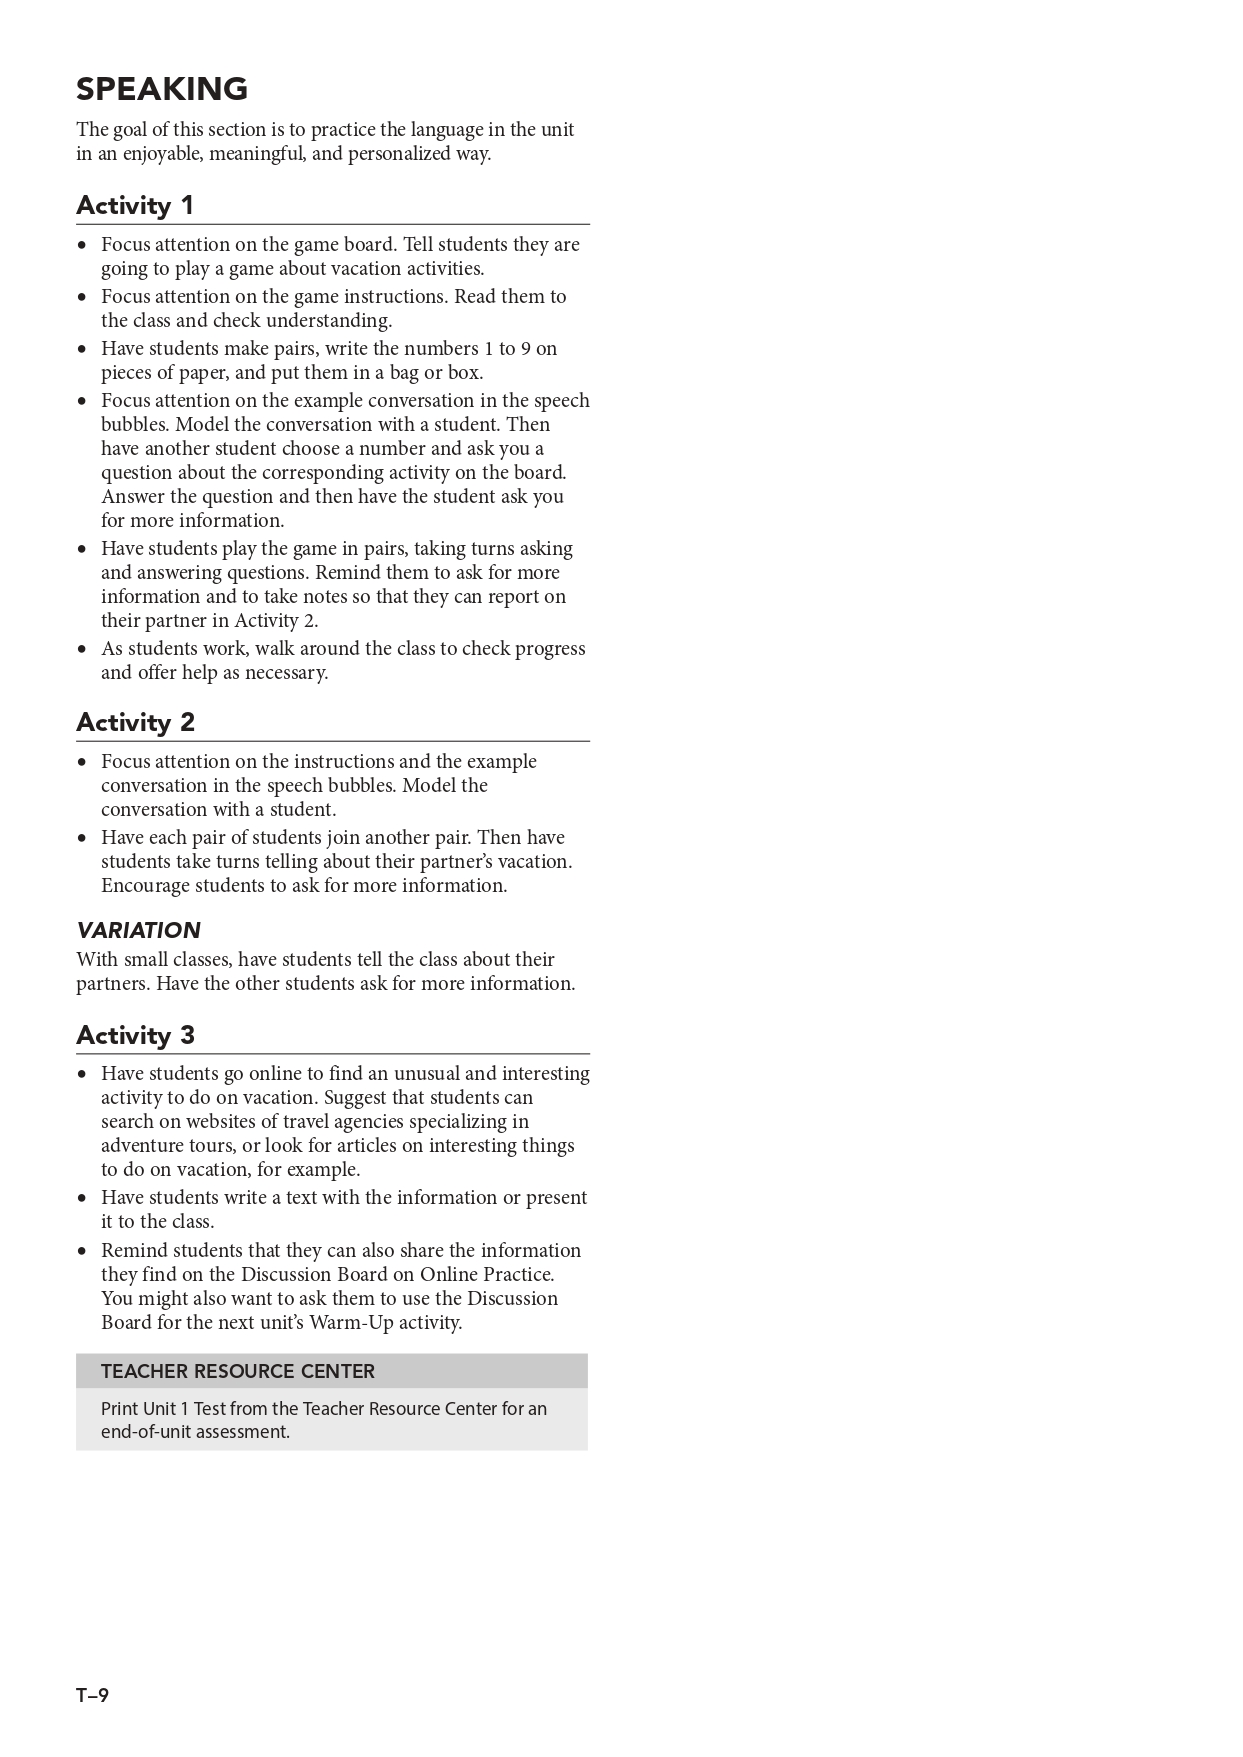 Smart Choice 4th Edition: Level 2: Teacher's Guide with Teacher Resource Center